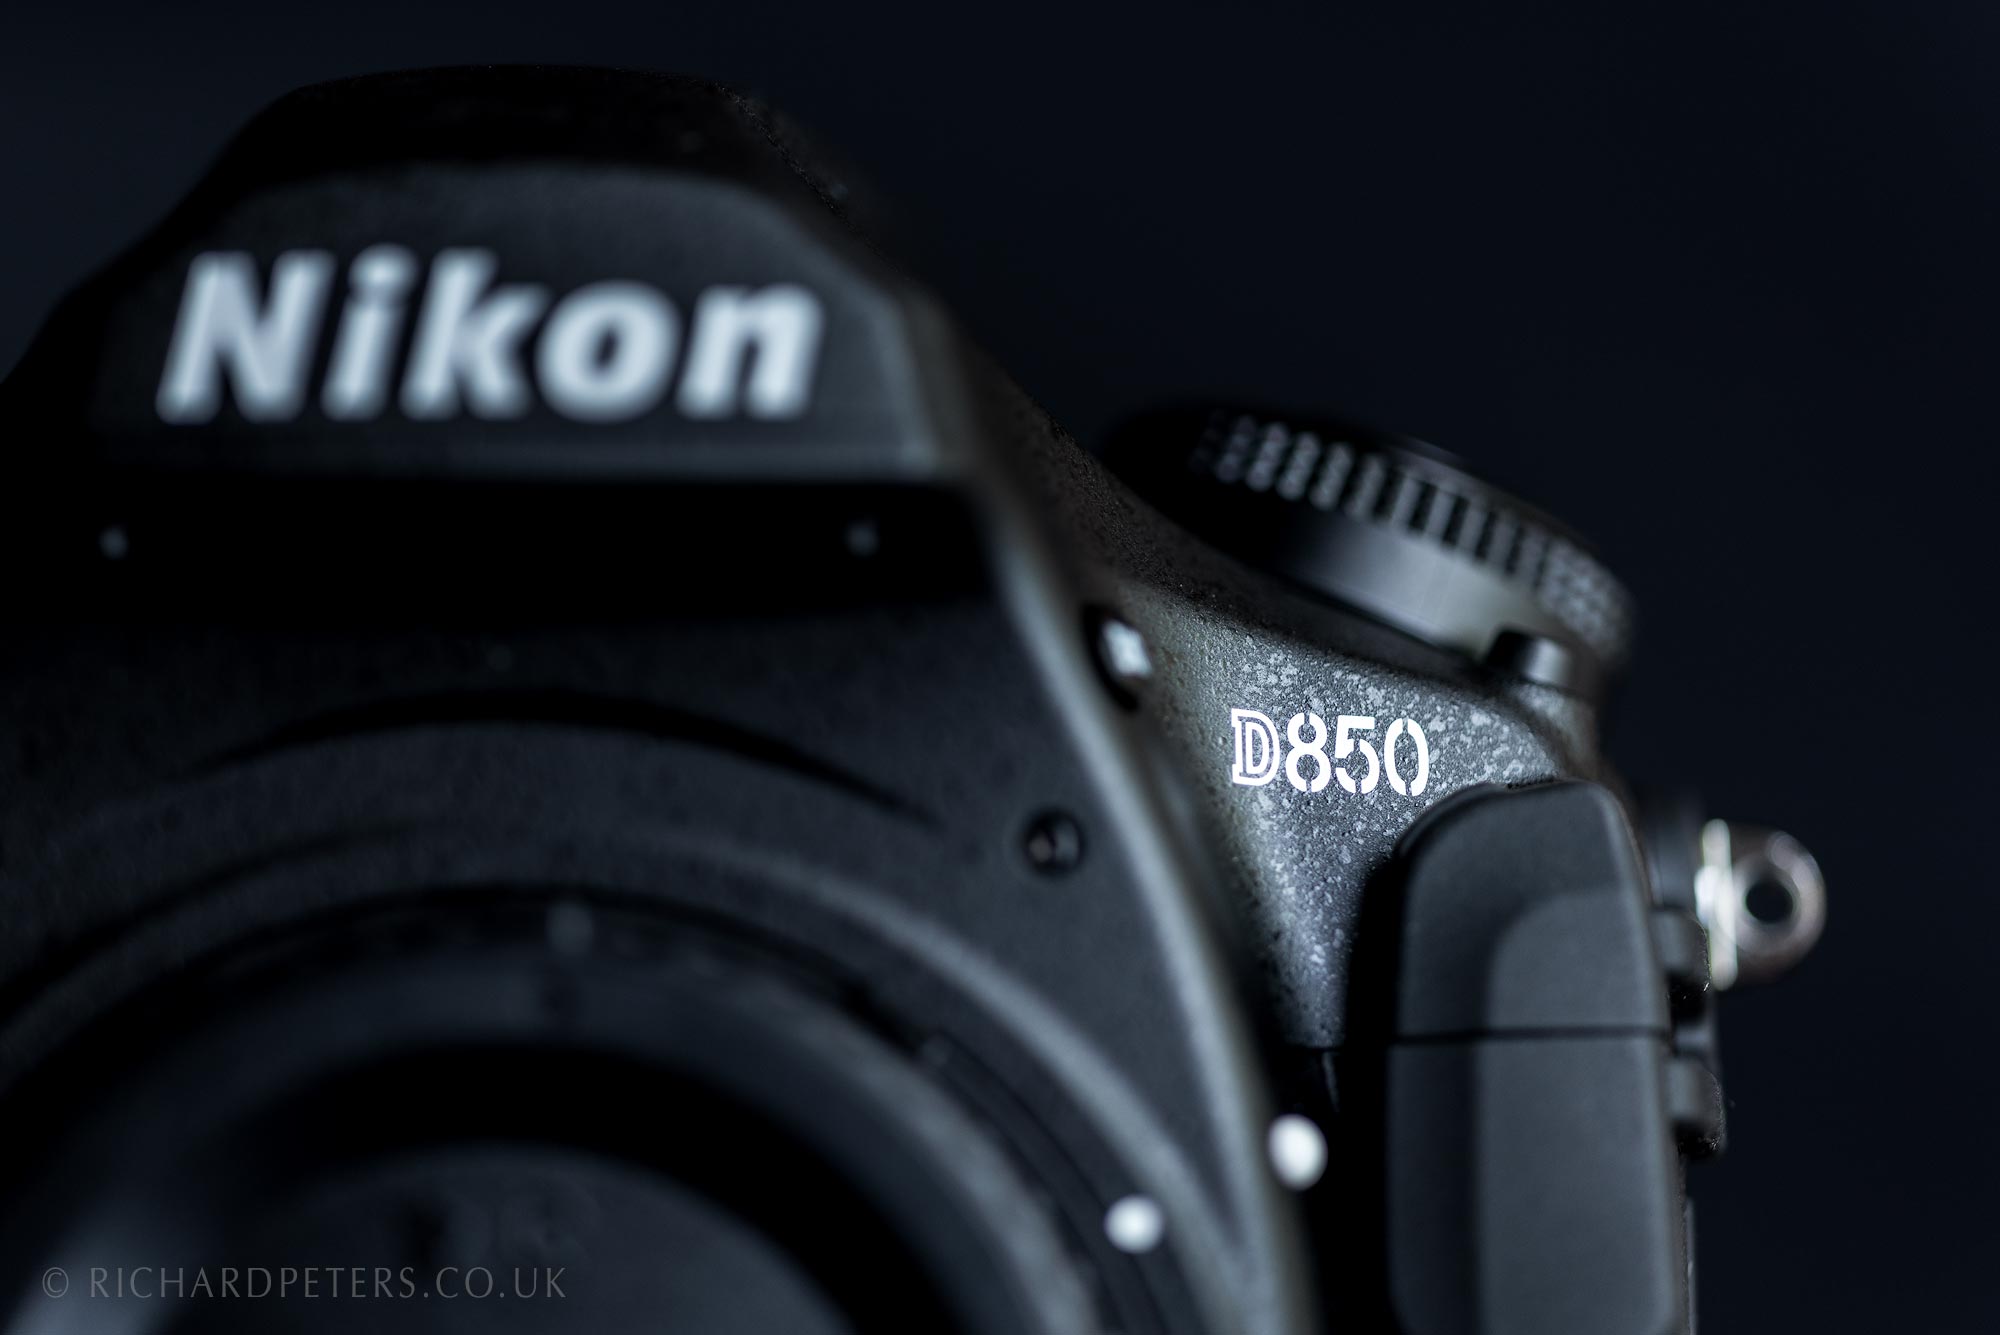 Nikon D850 review and logo